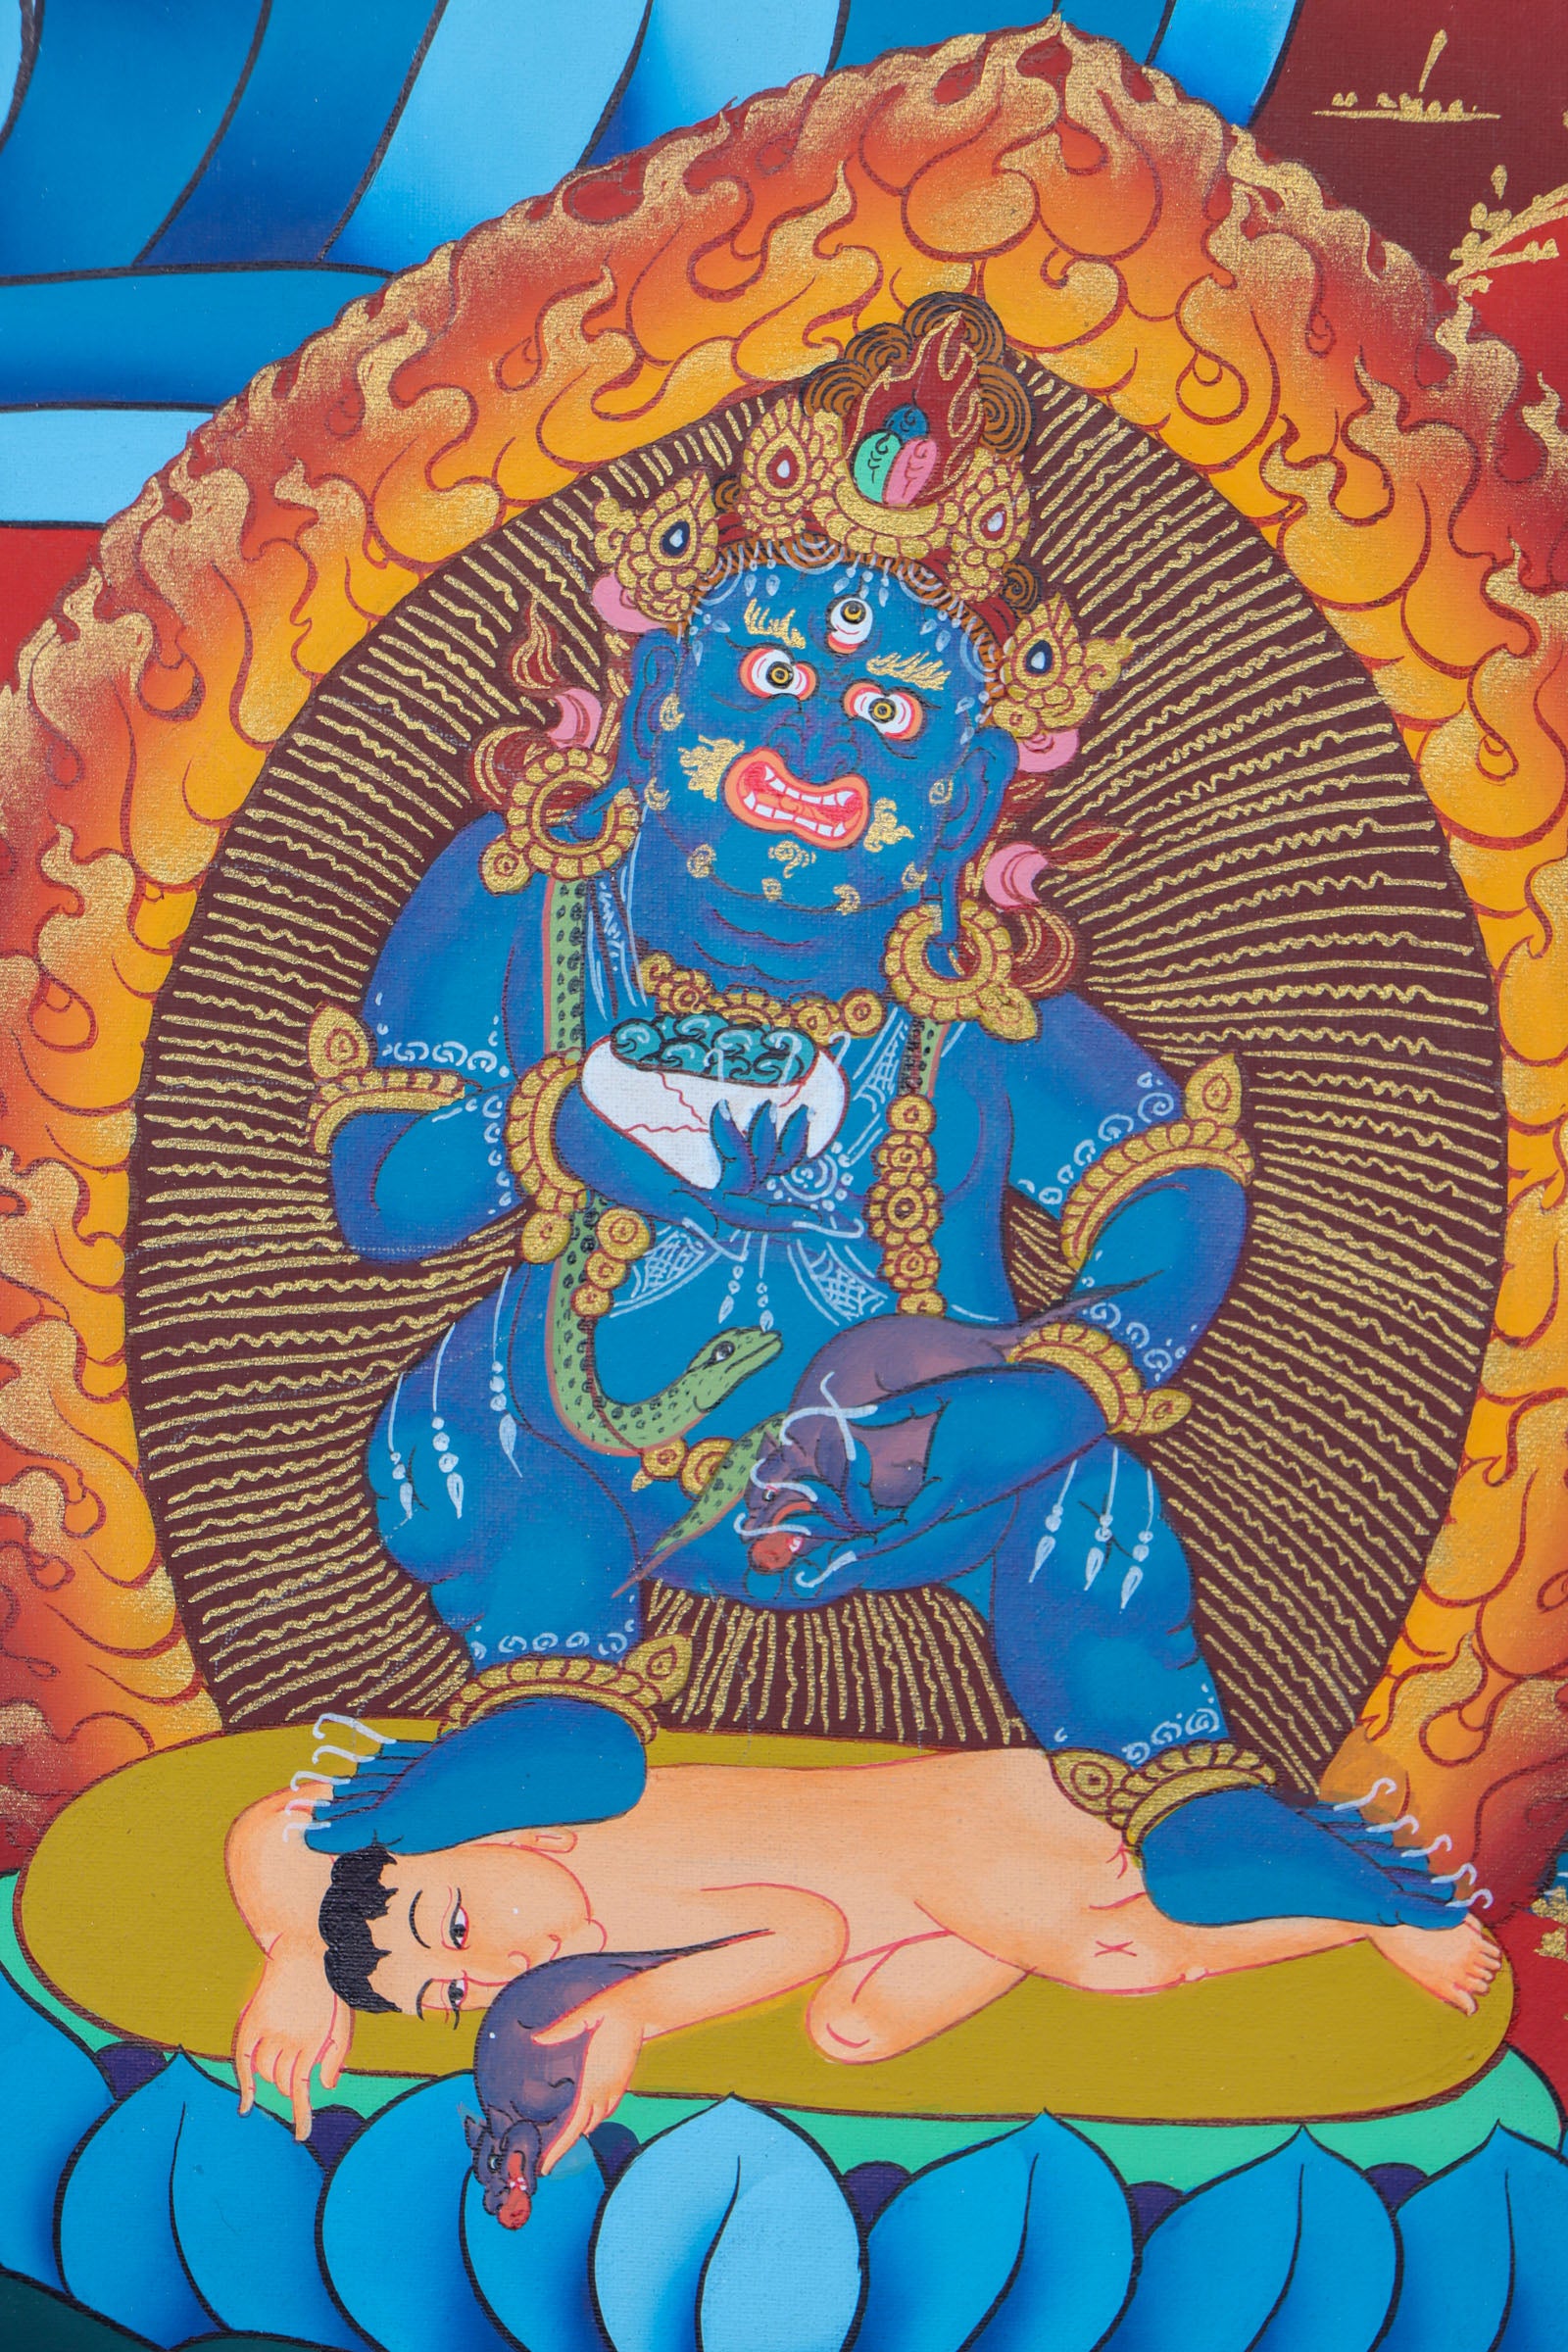 Pancha Kuber Thangka Painting for wealth and preposperity.